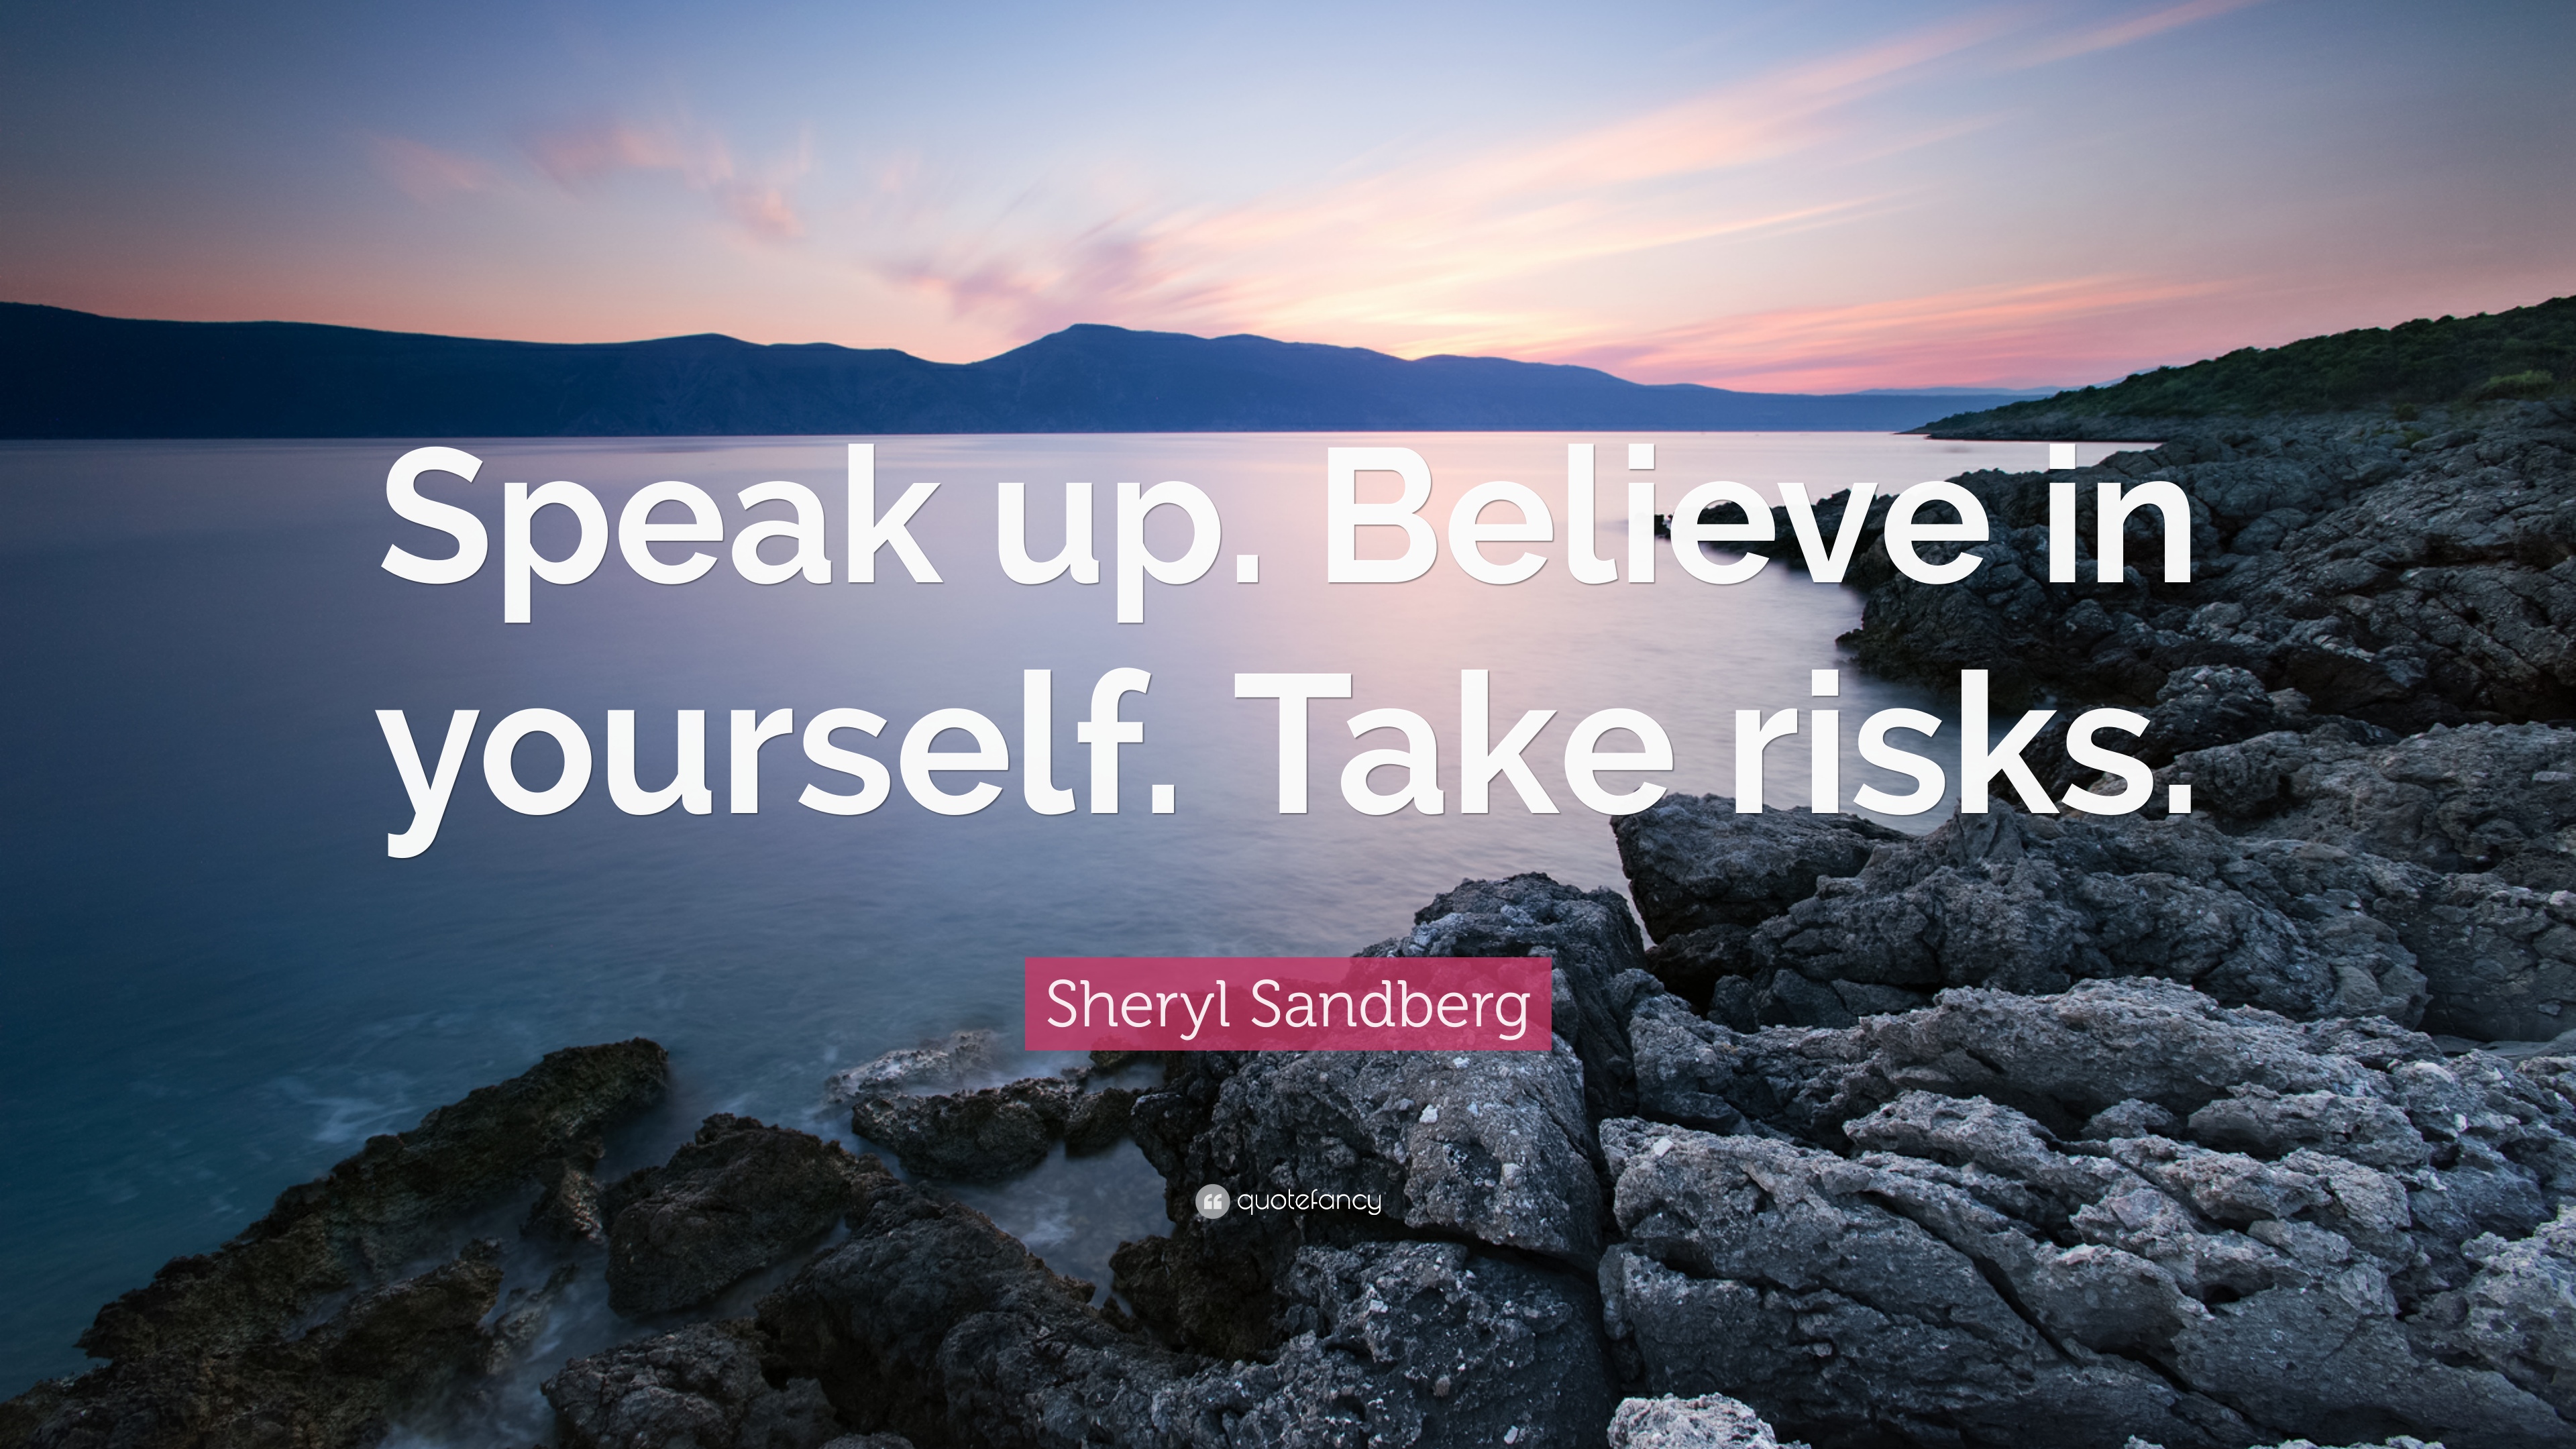 Sheryl Sandberg Quote: “Speak up. Believe in yourself. Take